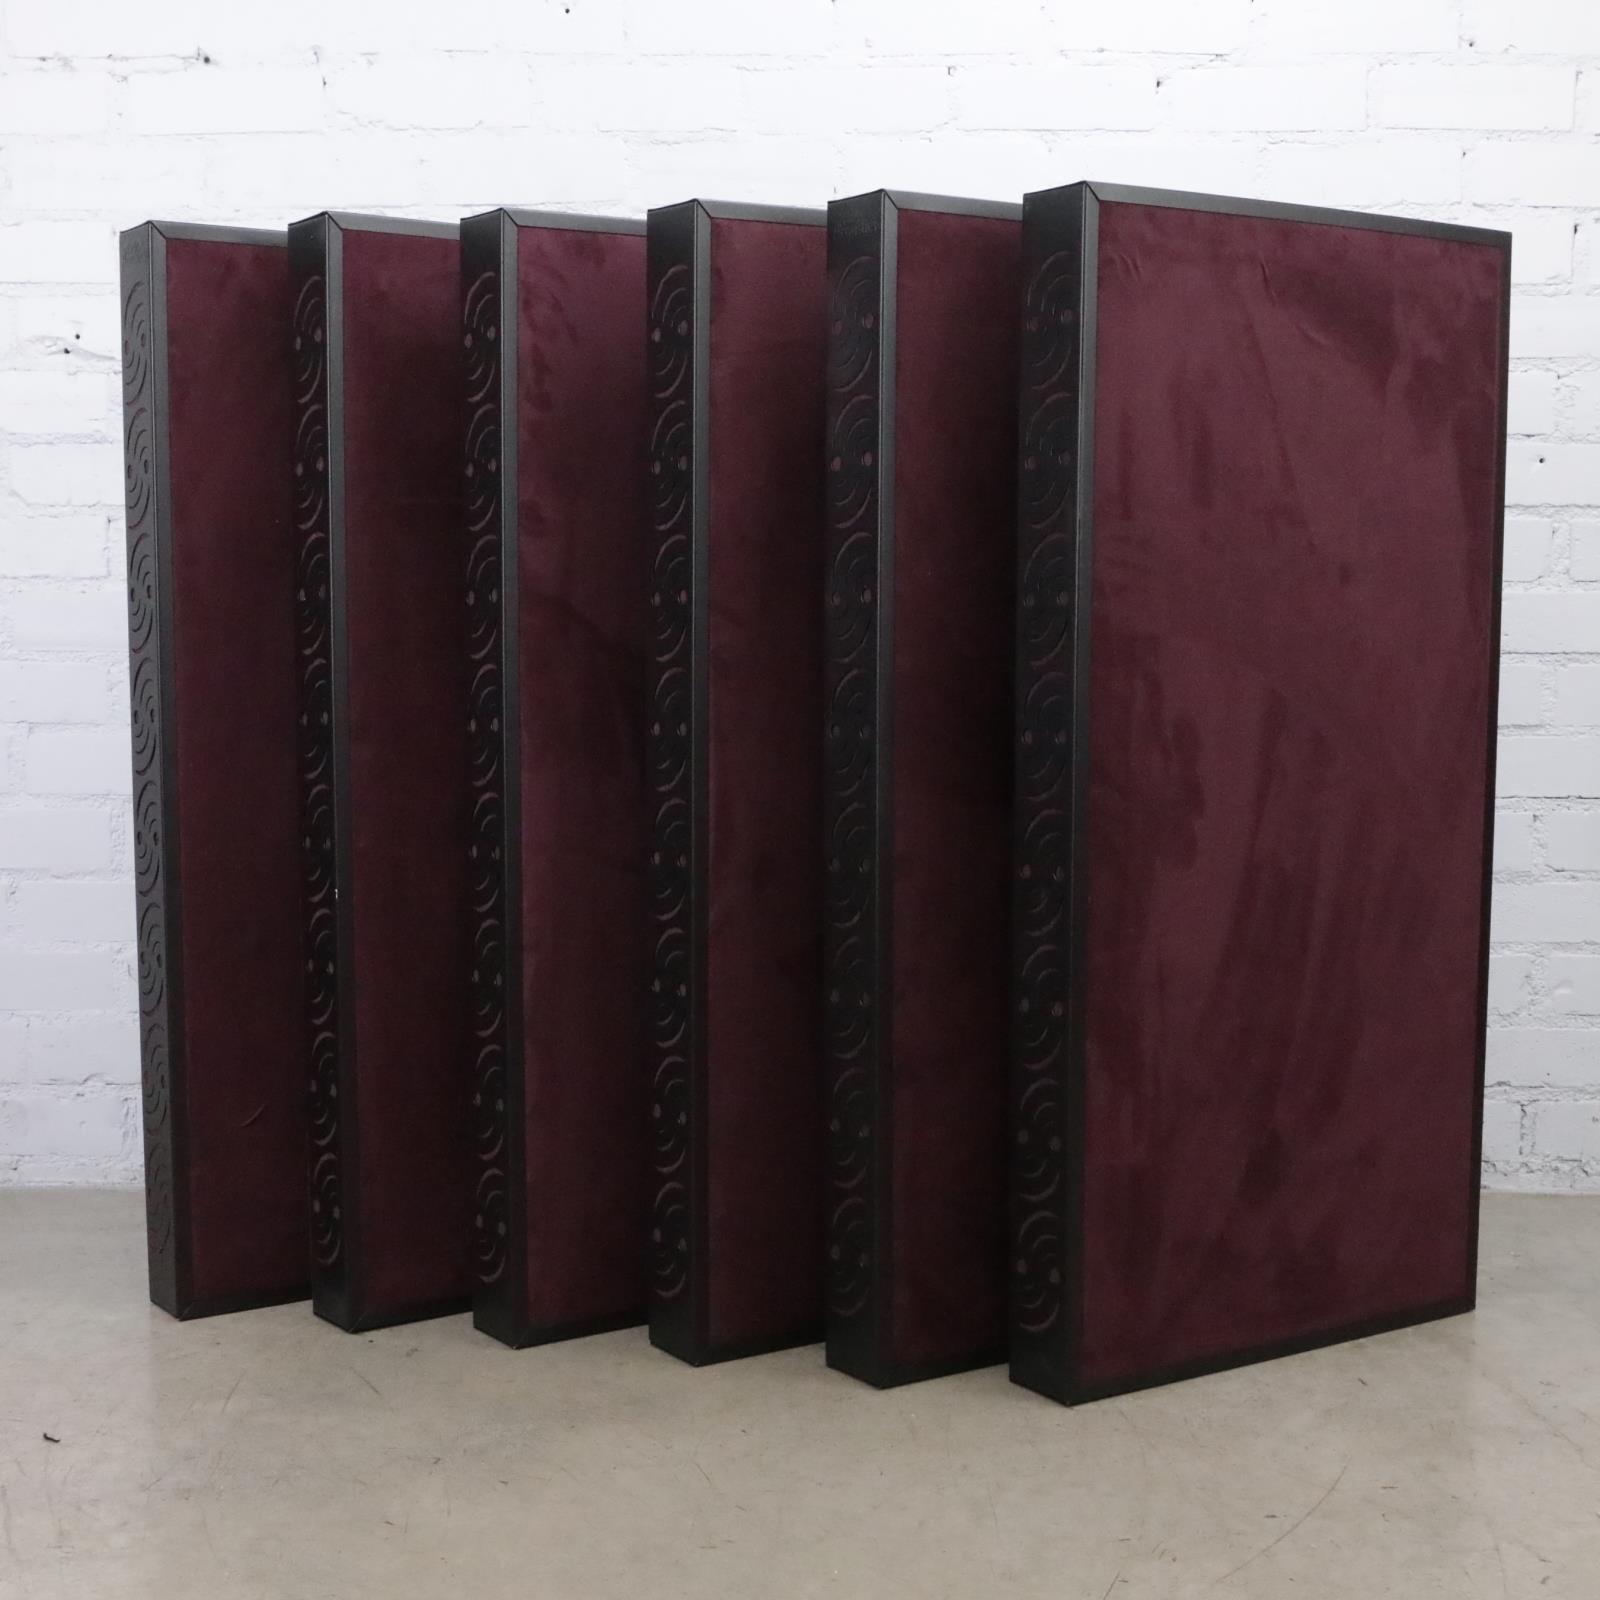 6 Ready Acoustic Chameleon Studio Sound Bass Trap Panels w/ Wall Mounts #48930